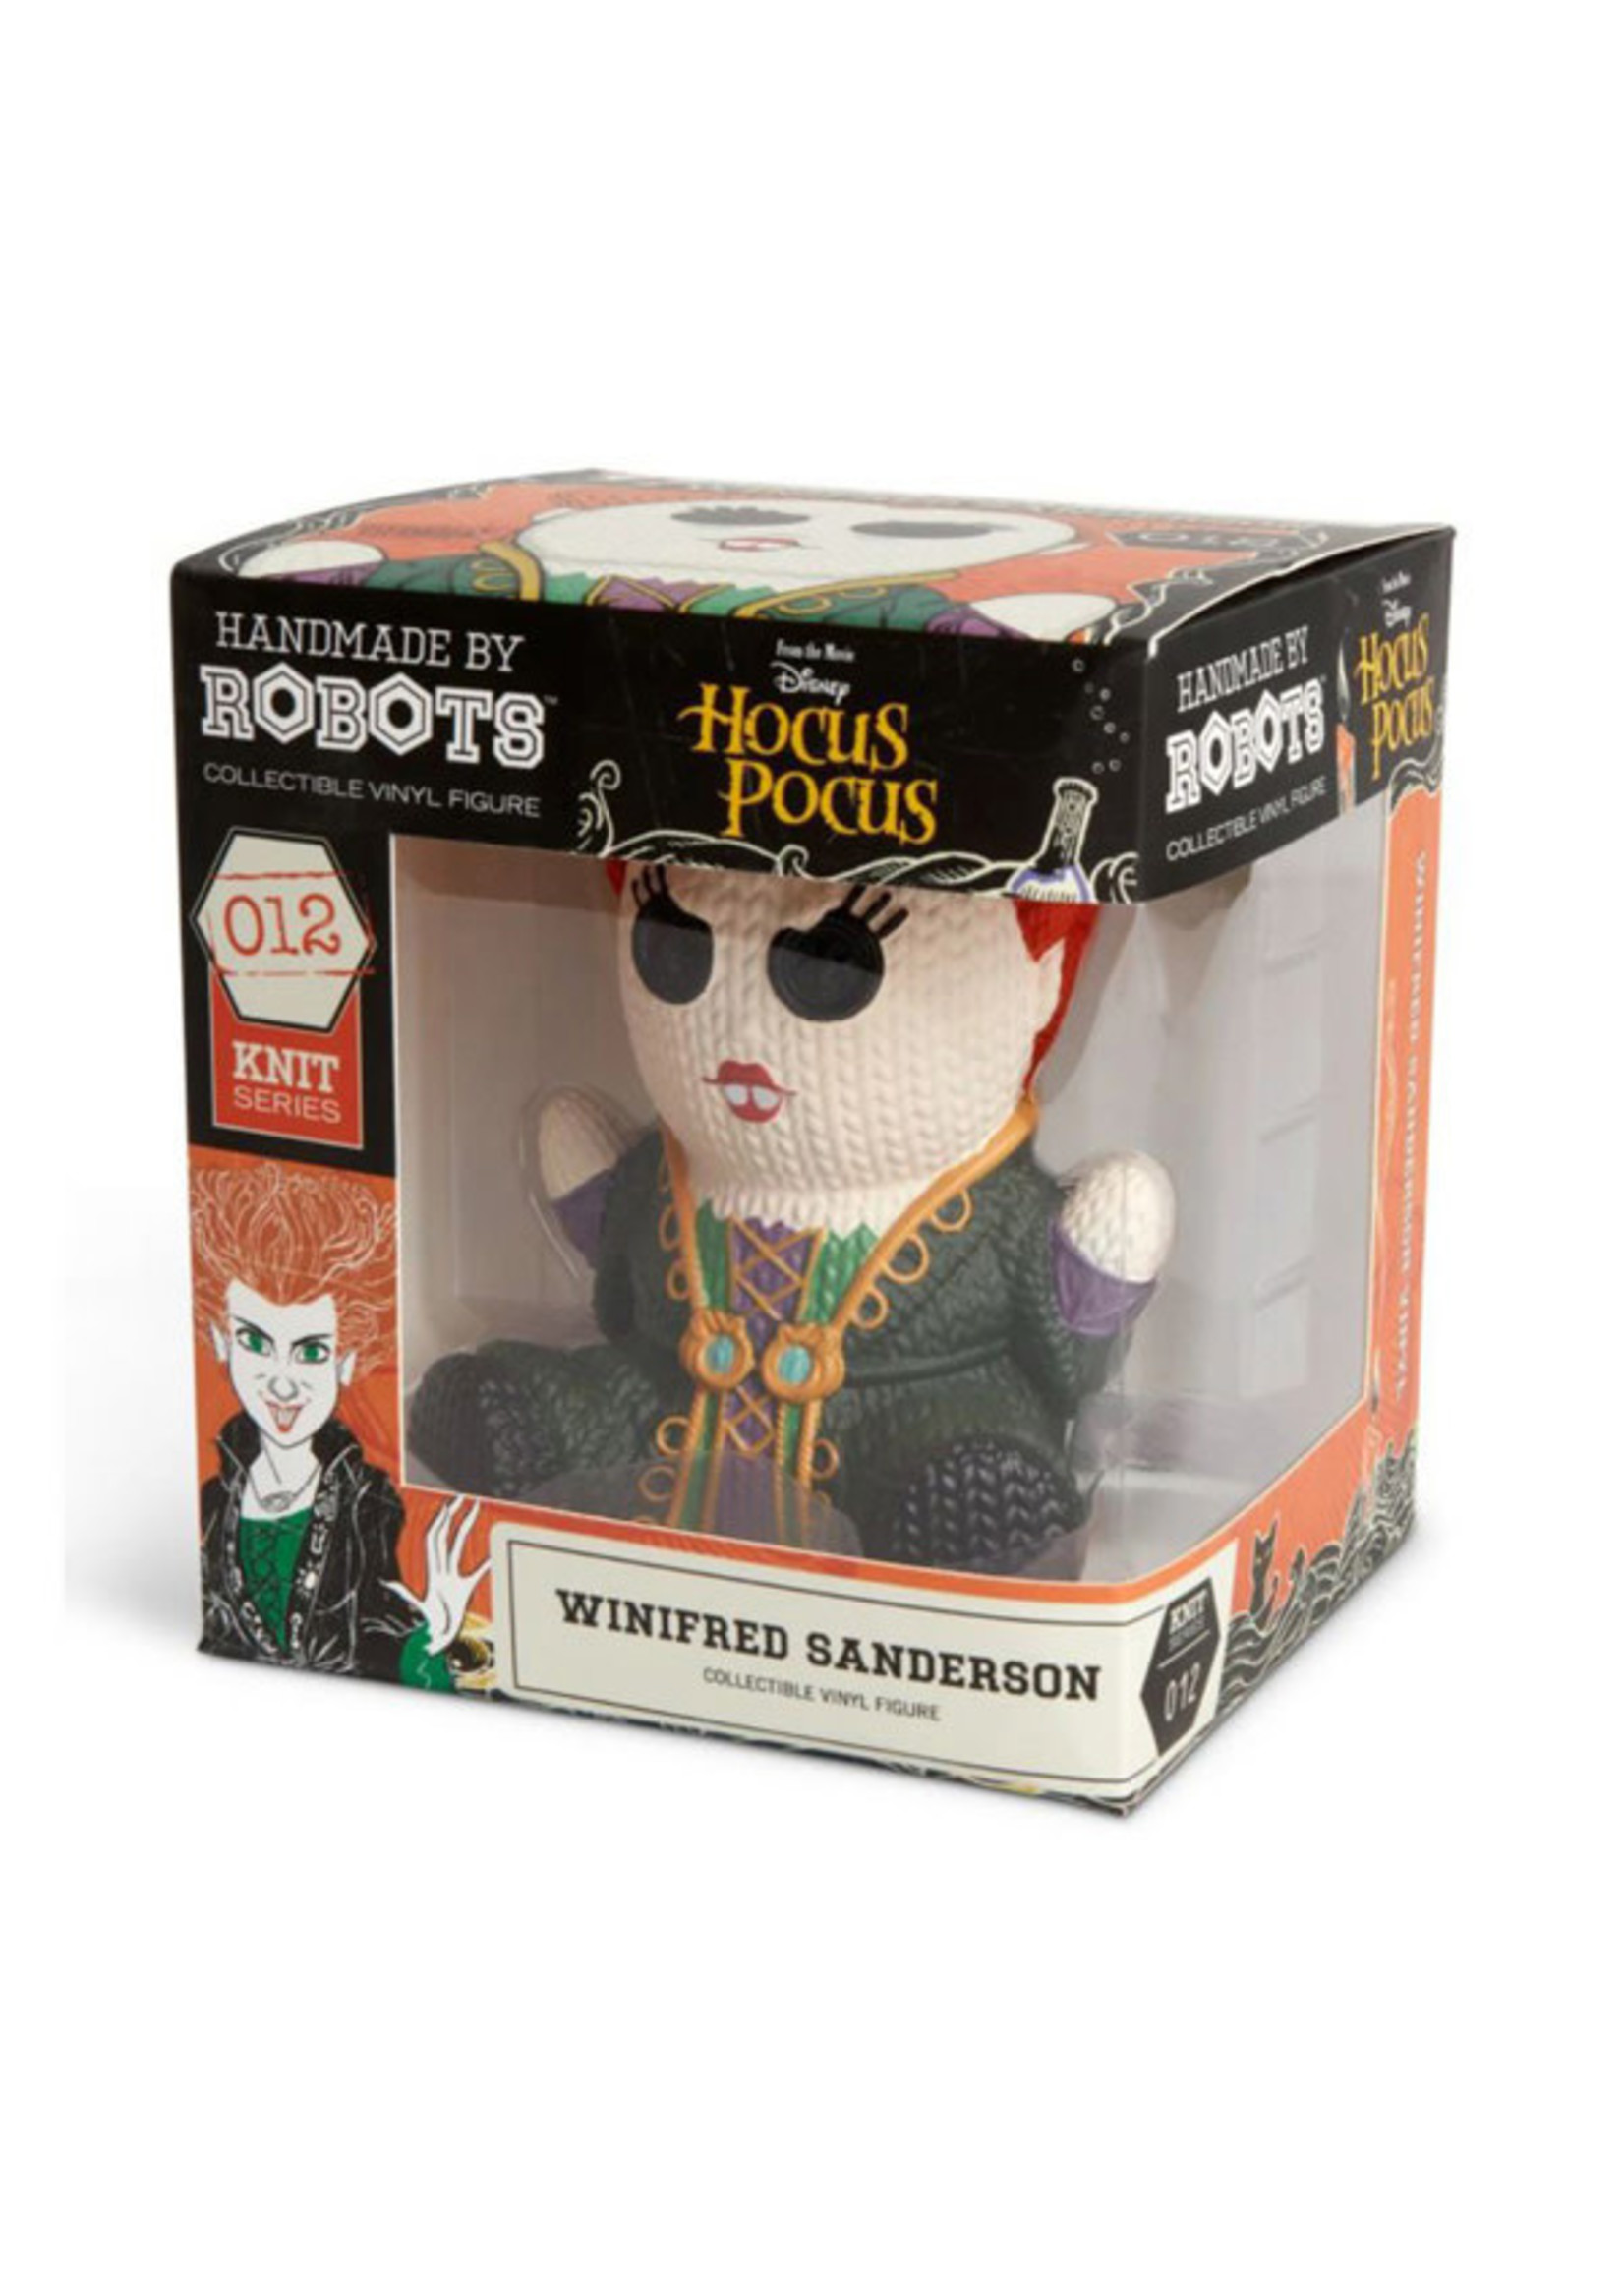 Hocus Pocus Winnifred Sanderson Handmade by Robots 5